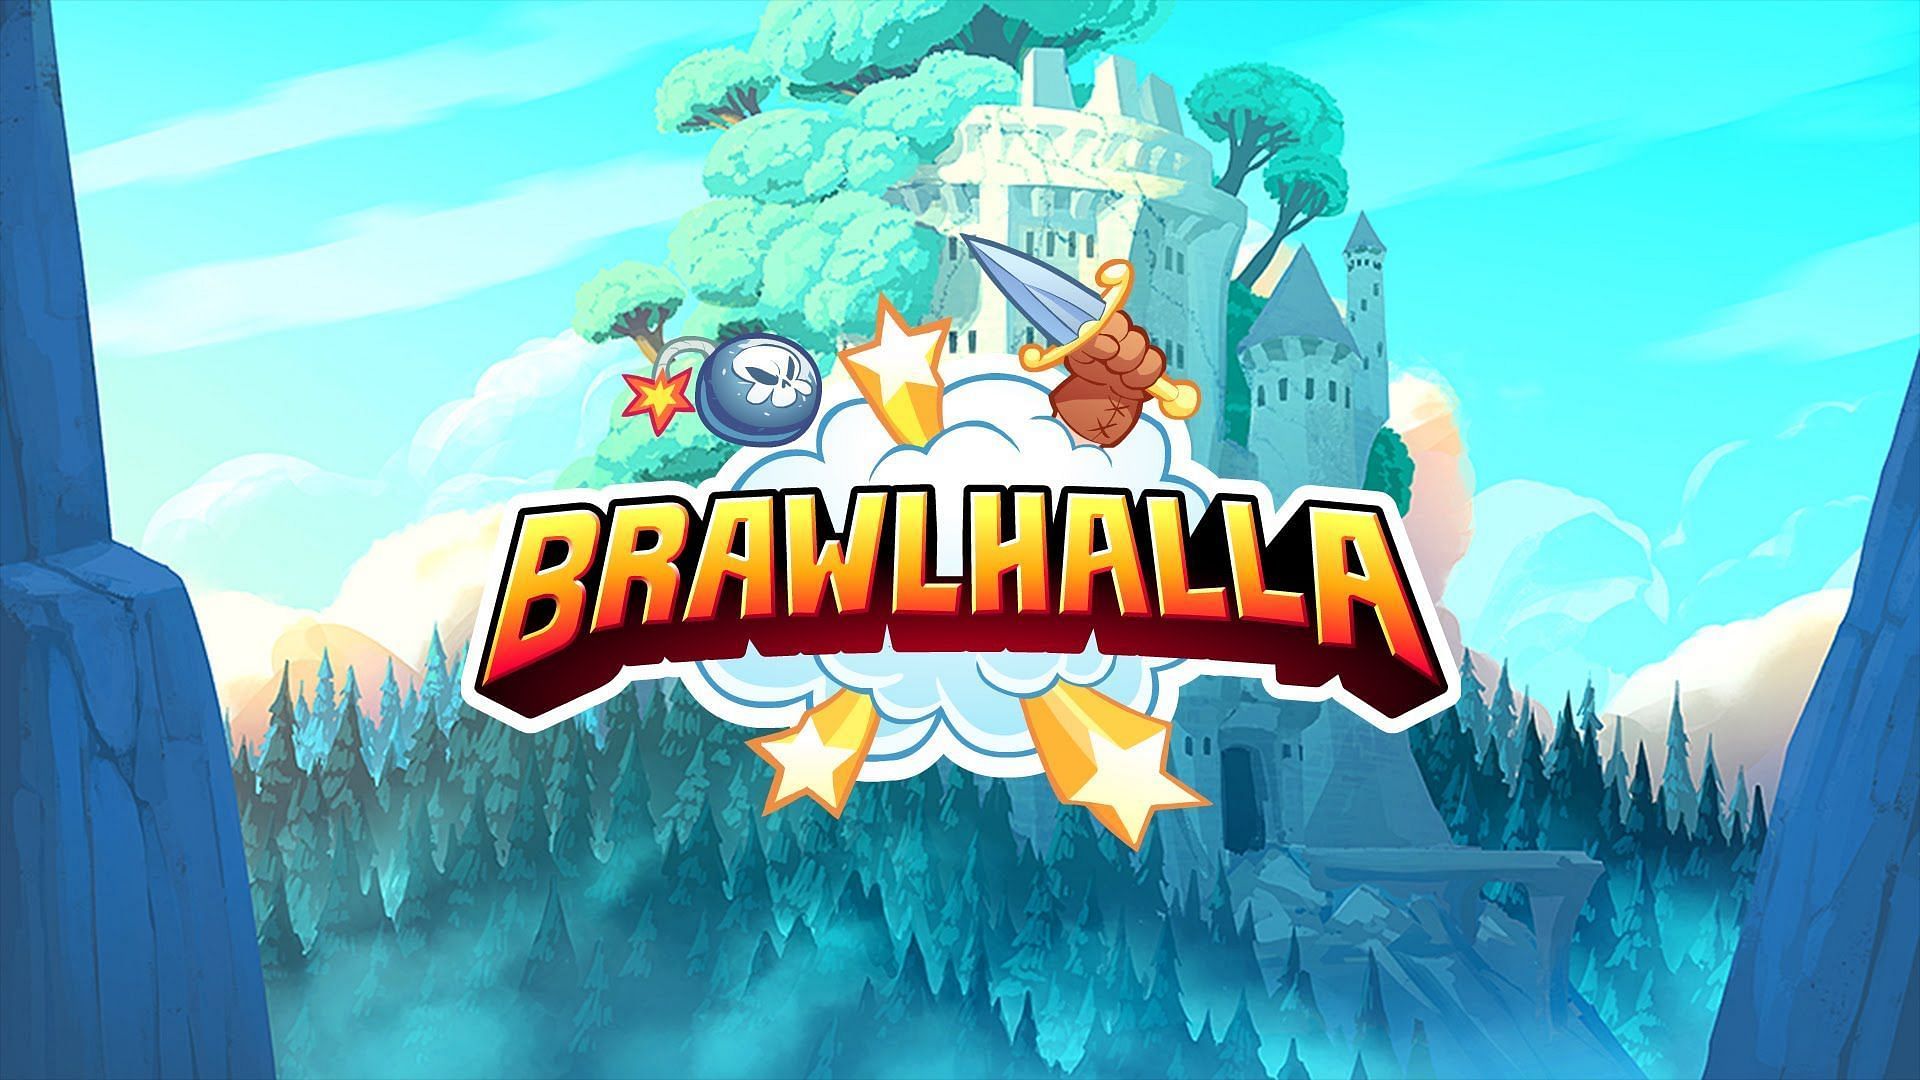 Brawlhalla (Image via Wallpaper Access)